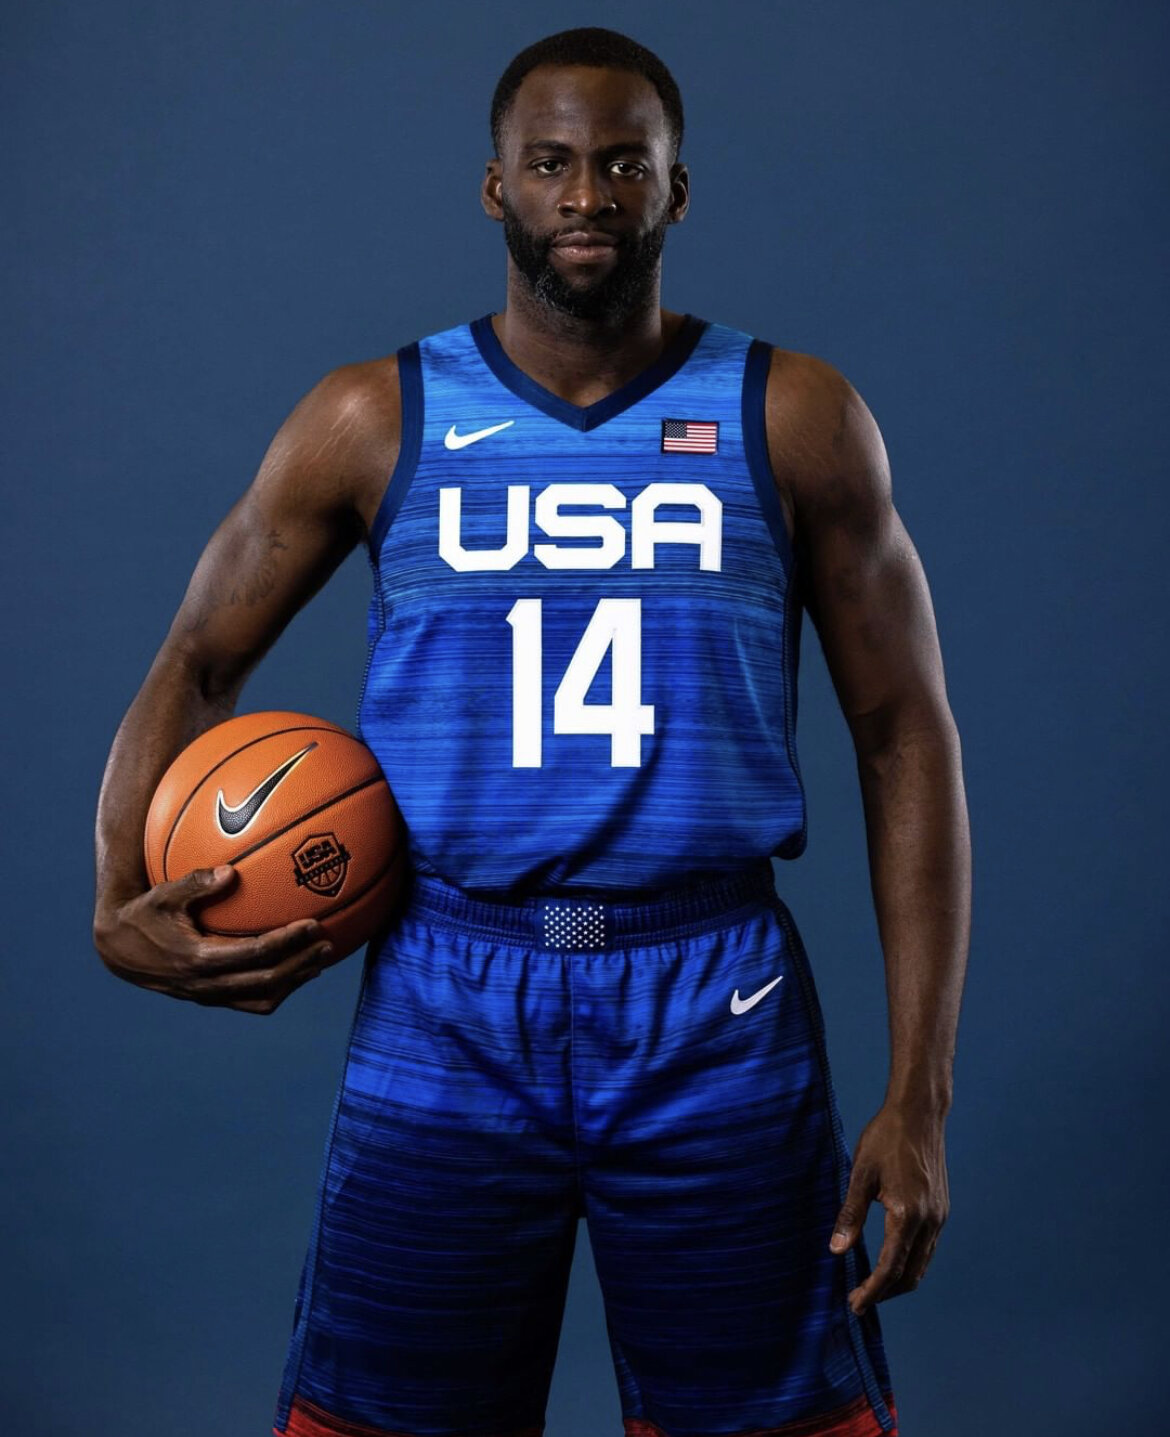 Nike Team USA basketball uniforms for 2016 Olympics unveiled